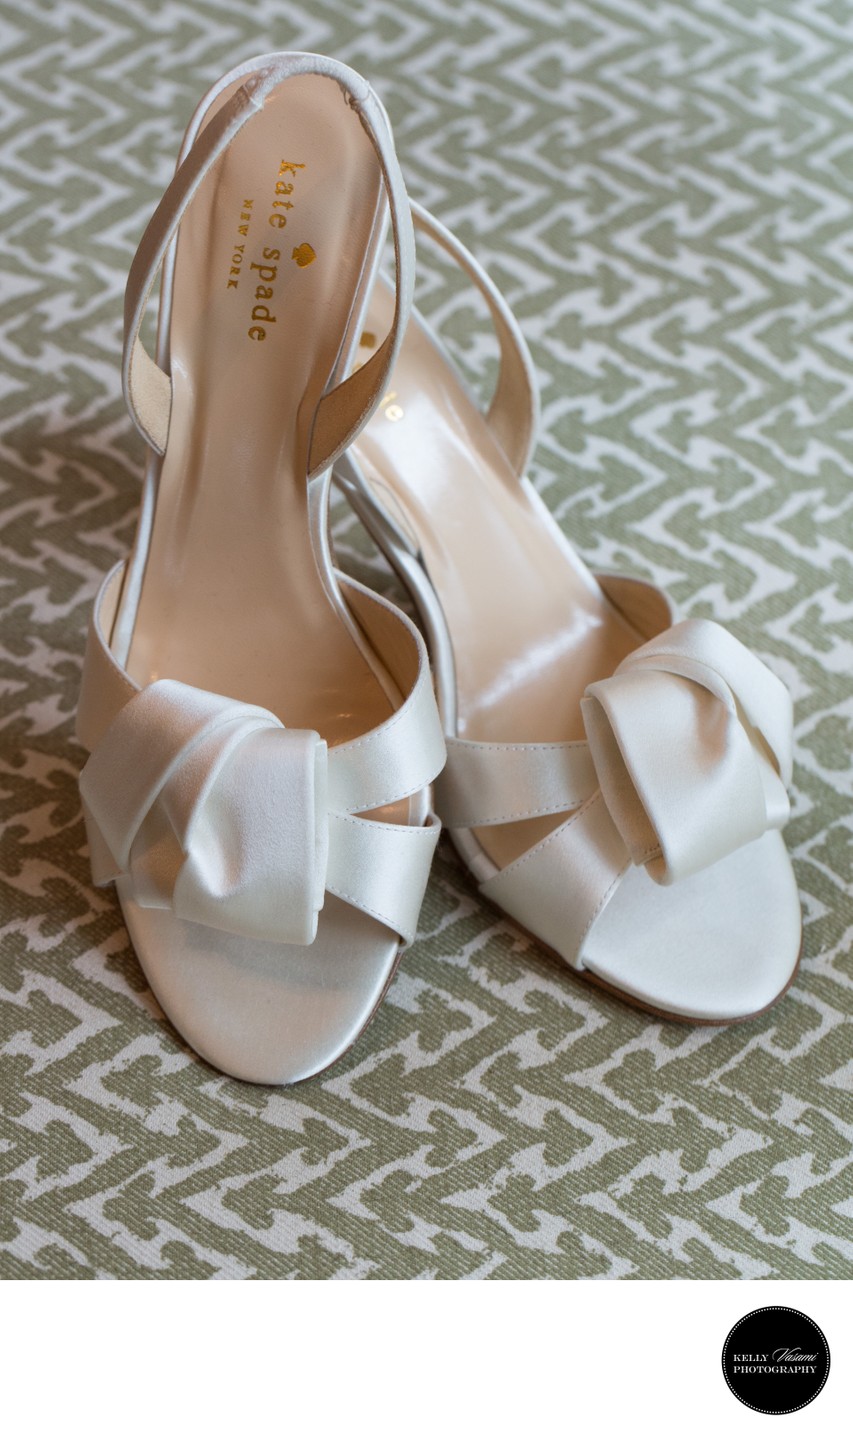 Kate Spade Bridal Shoes | Westchester NY Wedding